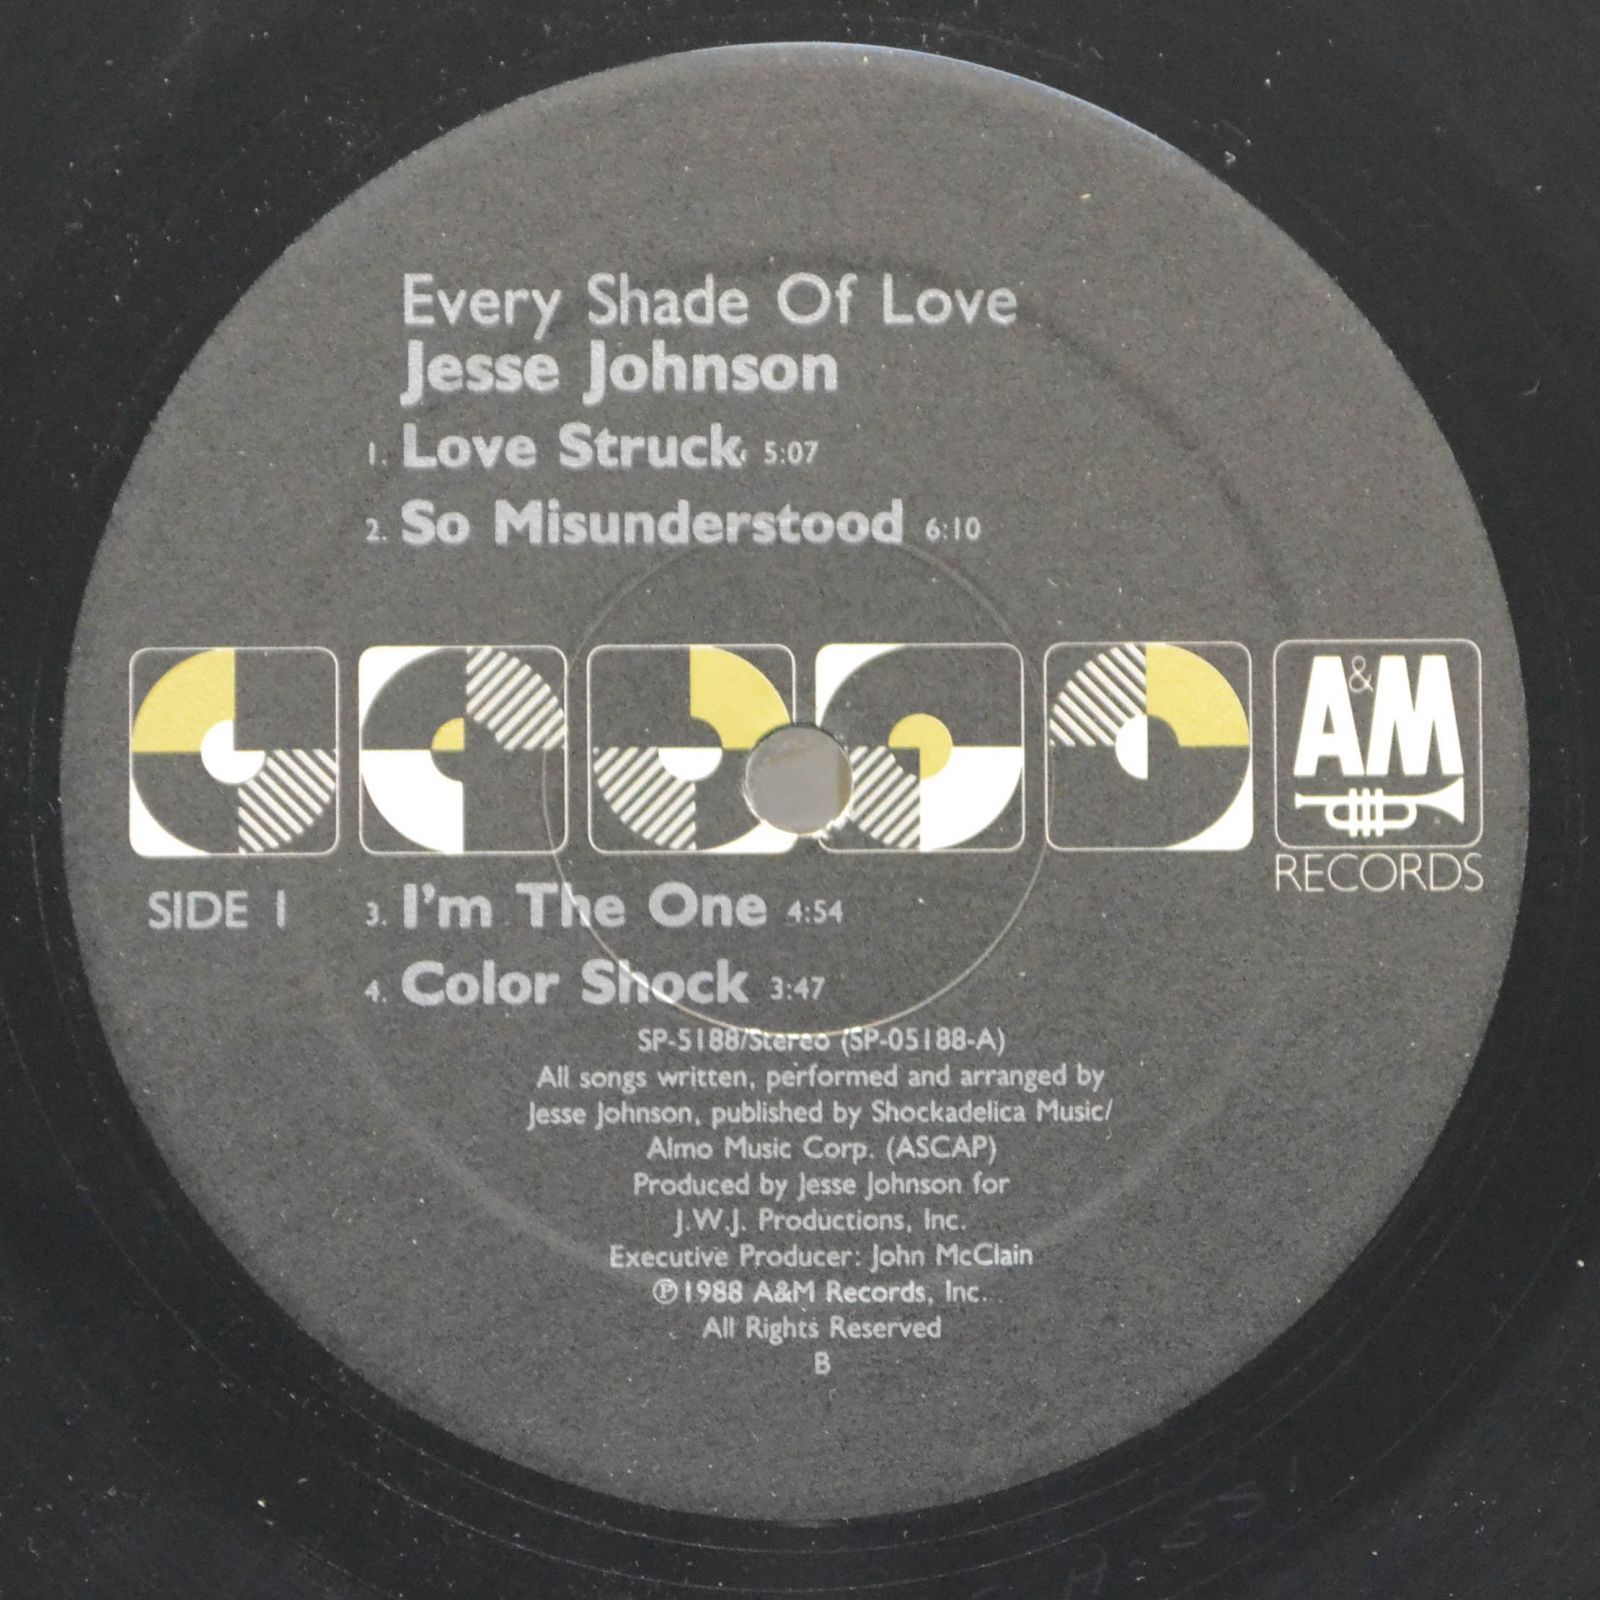 Jesse Johnson — Every Shade Of Love, 1988